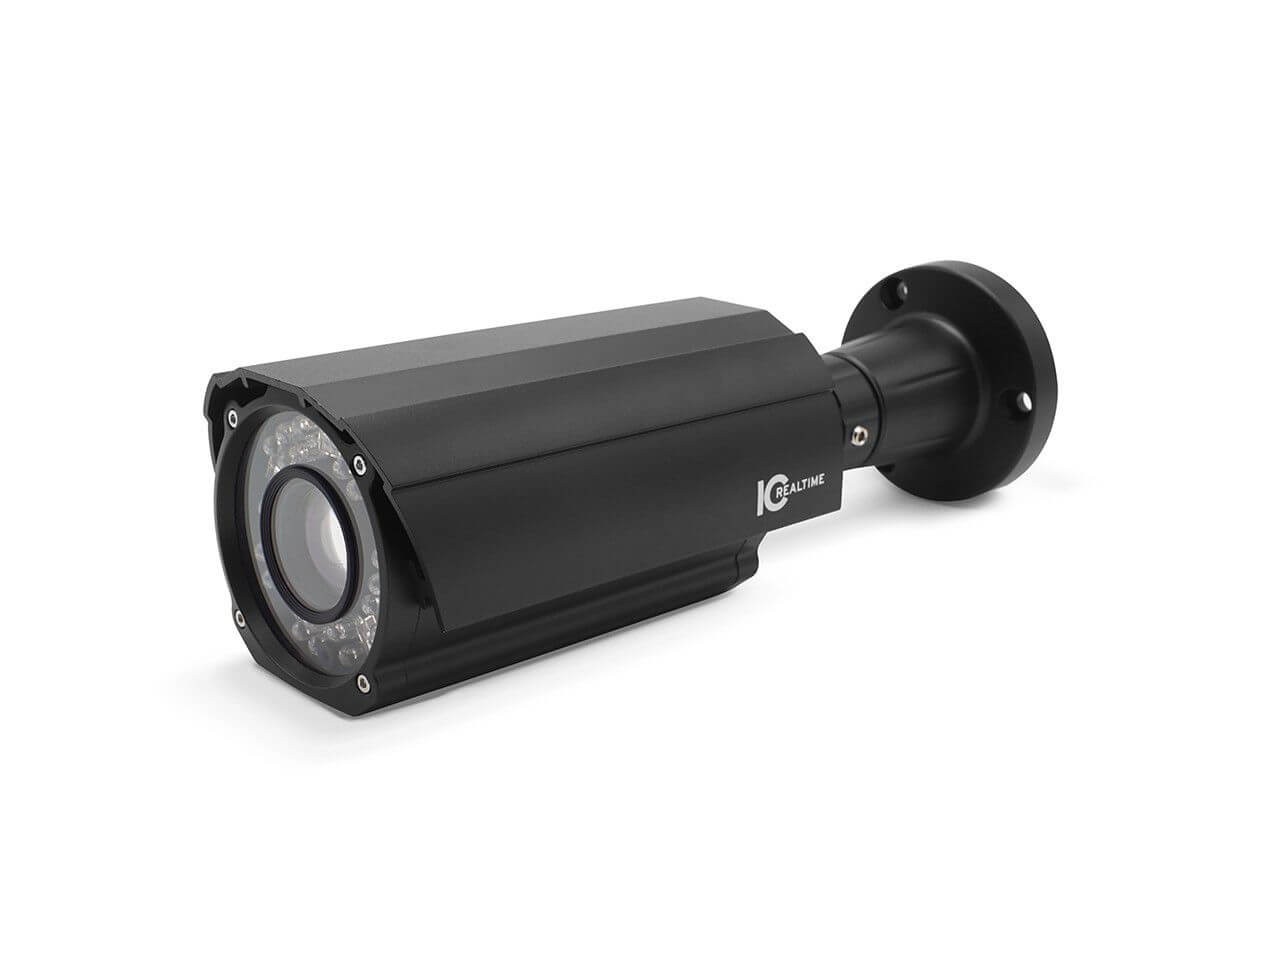 AVS-ID1-V2 2MP HDAVS Outdoor Mid Size License Plate Recognition Bullet Camera/Varifocal 5-50mm Lens/LPR Smart IR/12VDC by ICRealtime